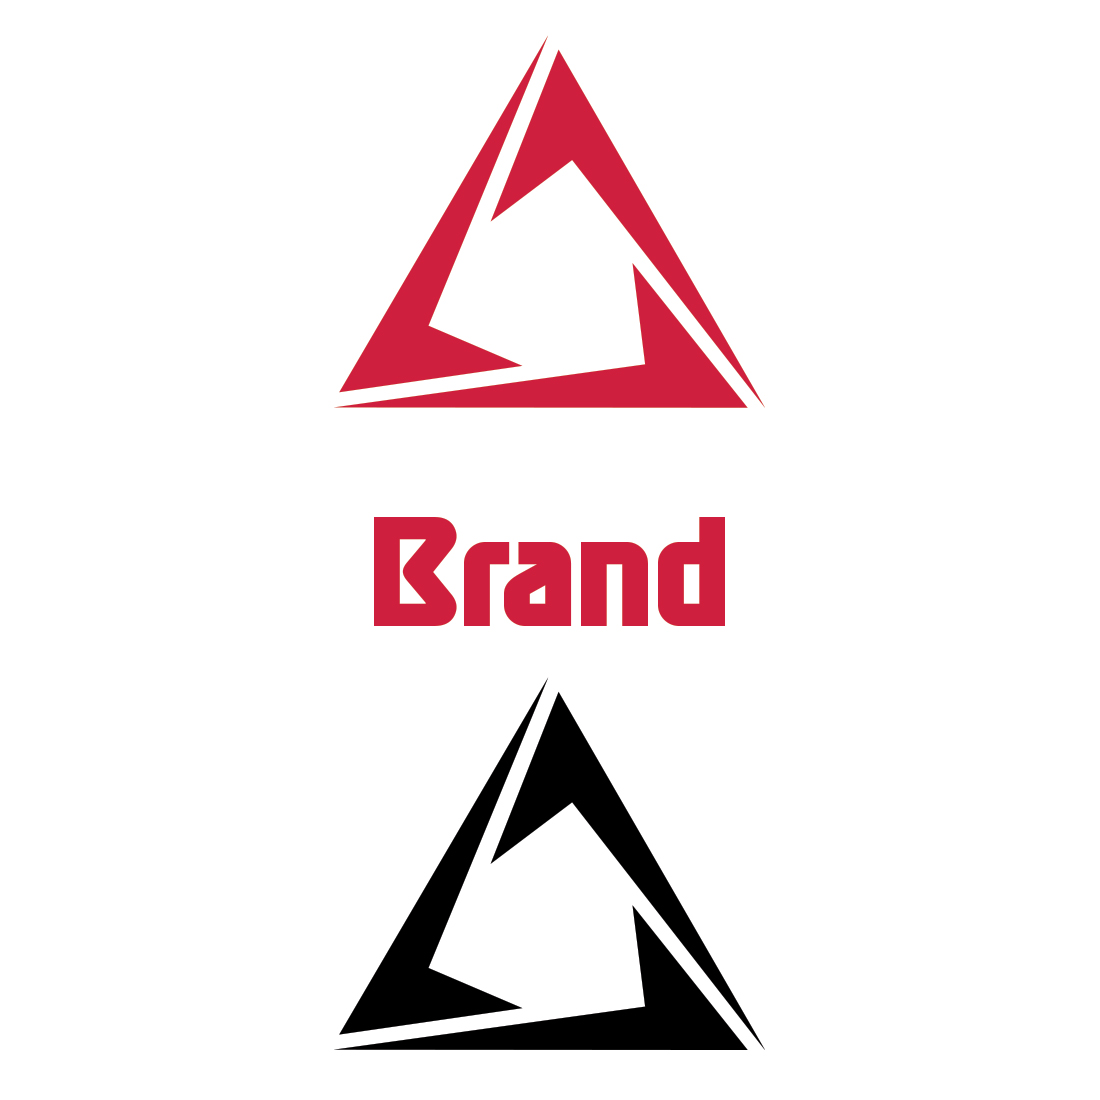 Brand Logo preview image.